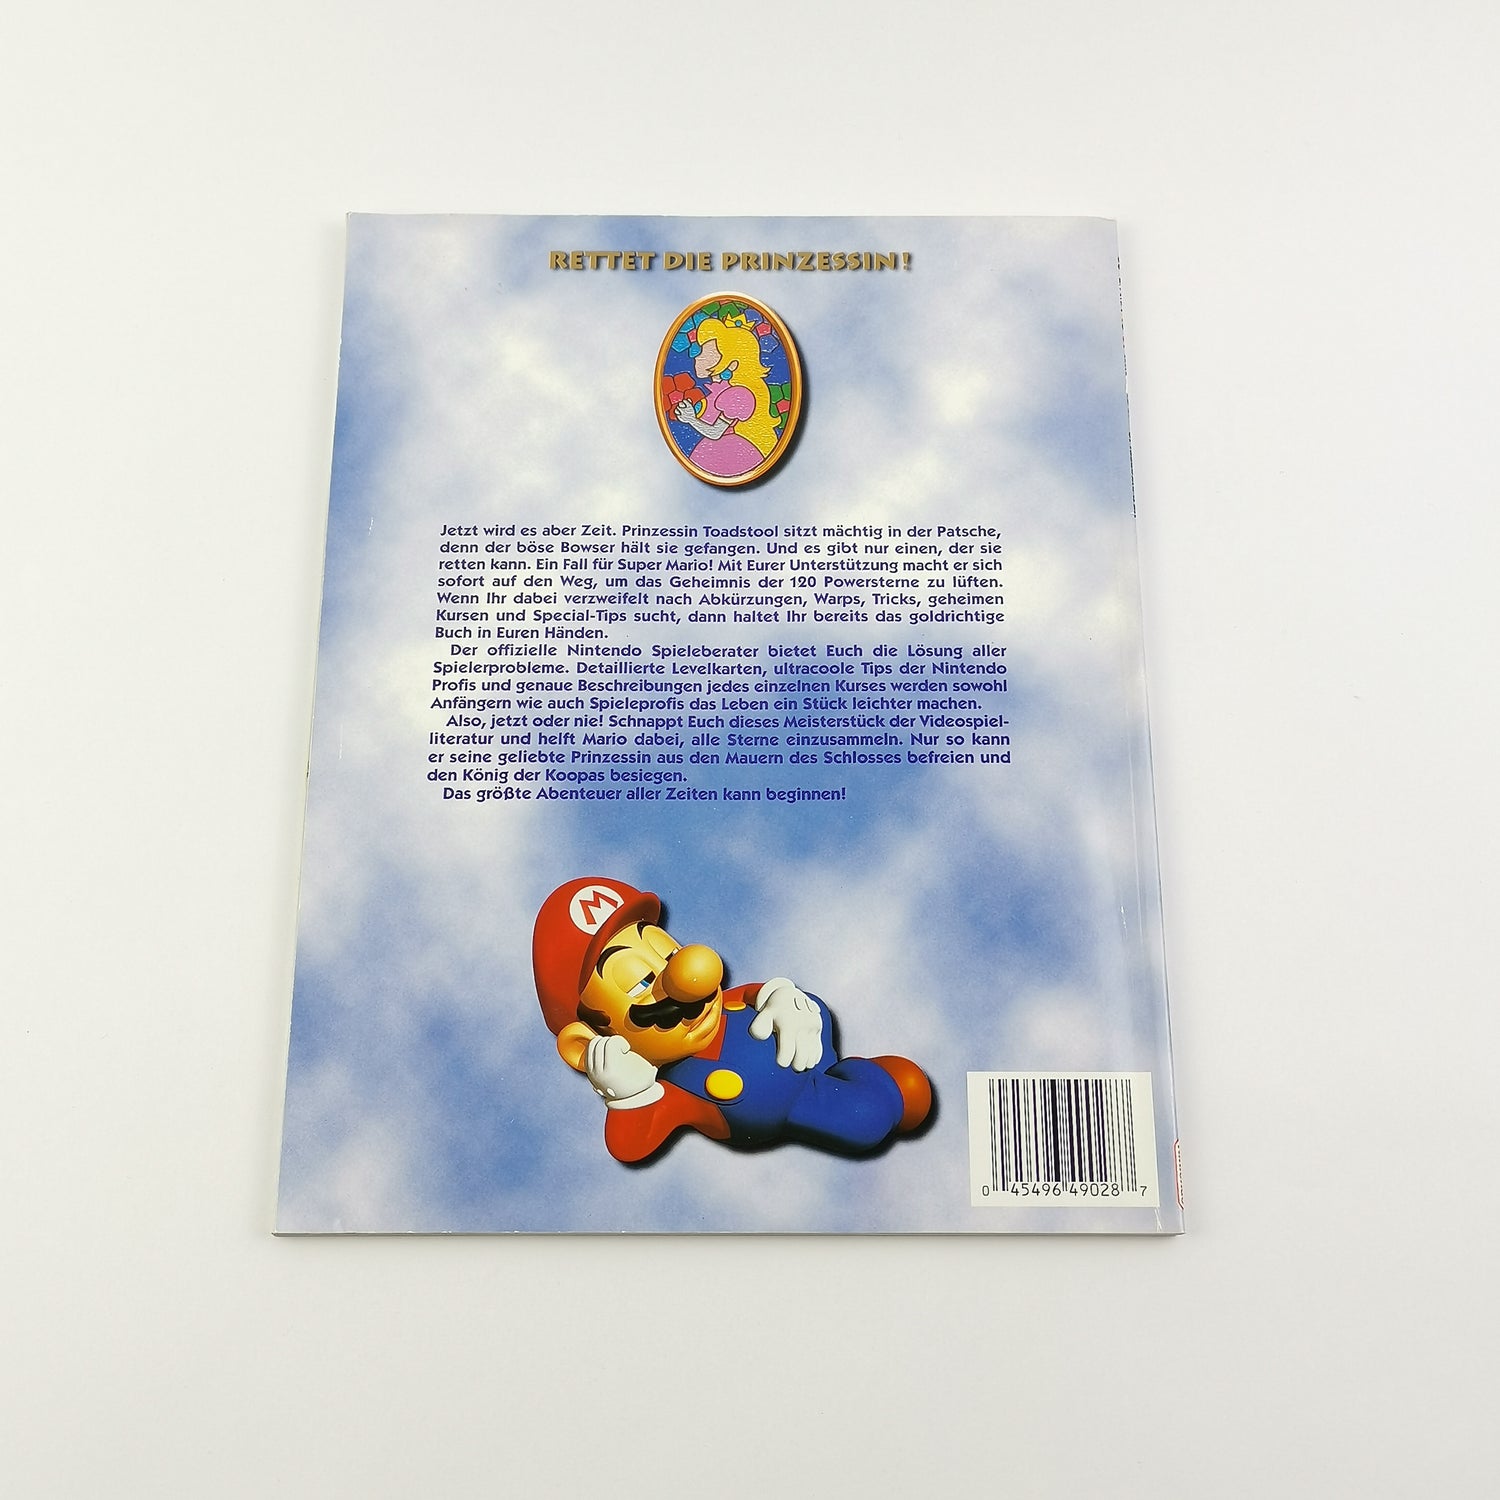 Nintendo 64 game advisor: Super Mario 64 - Guide solution booklet N64 PAL